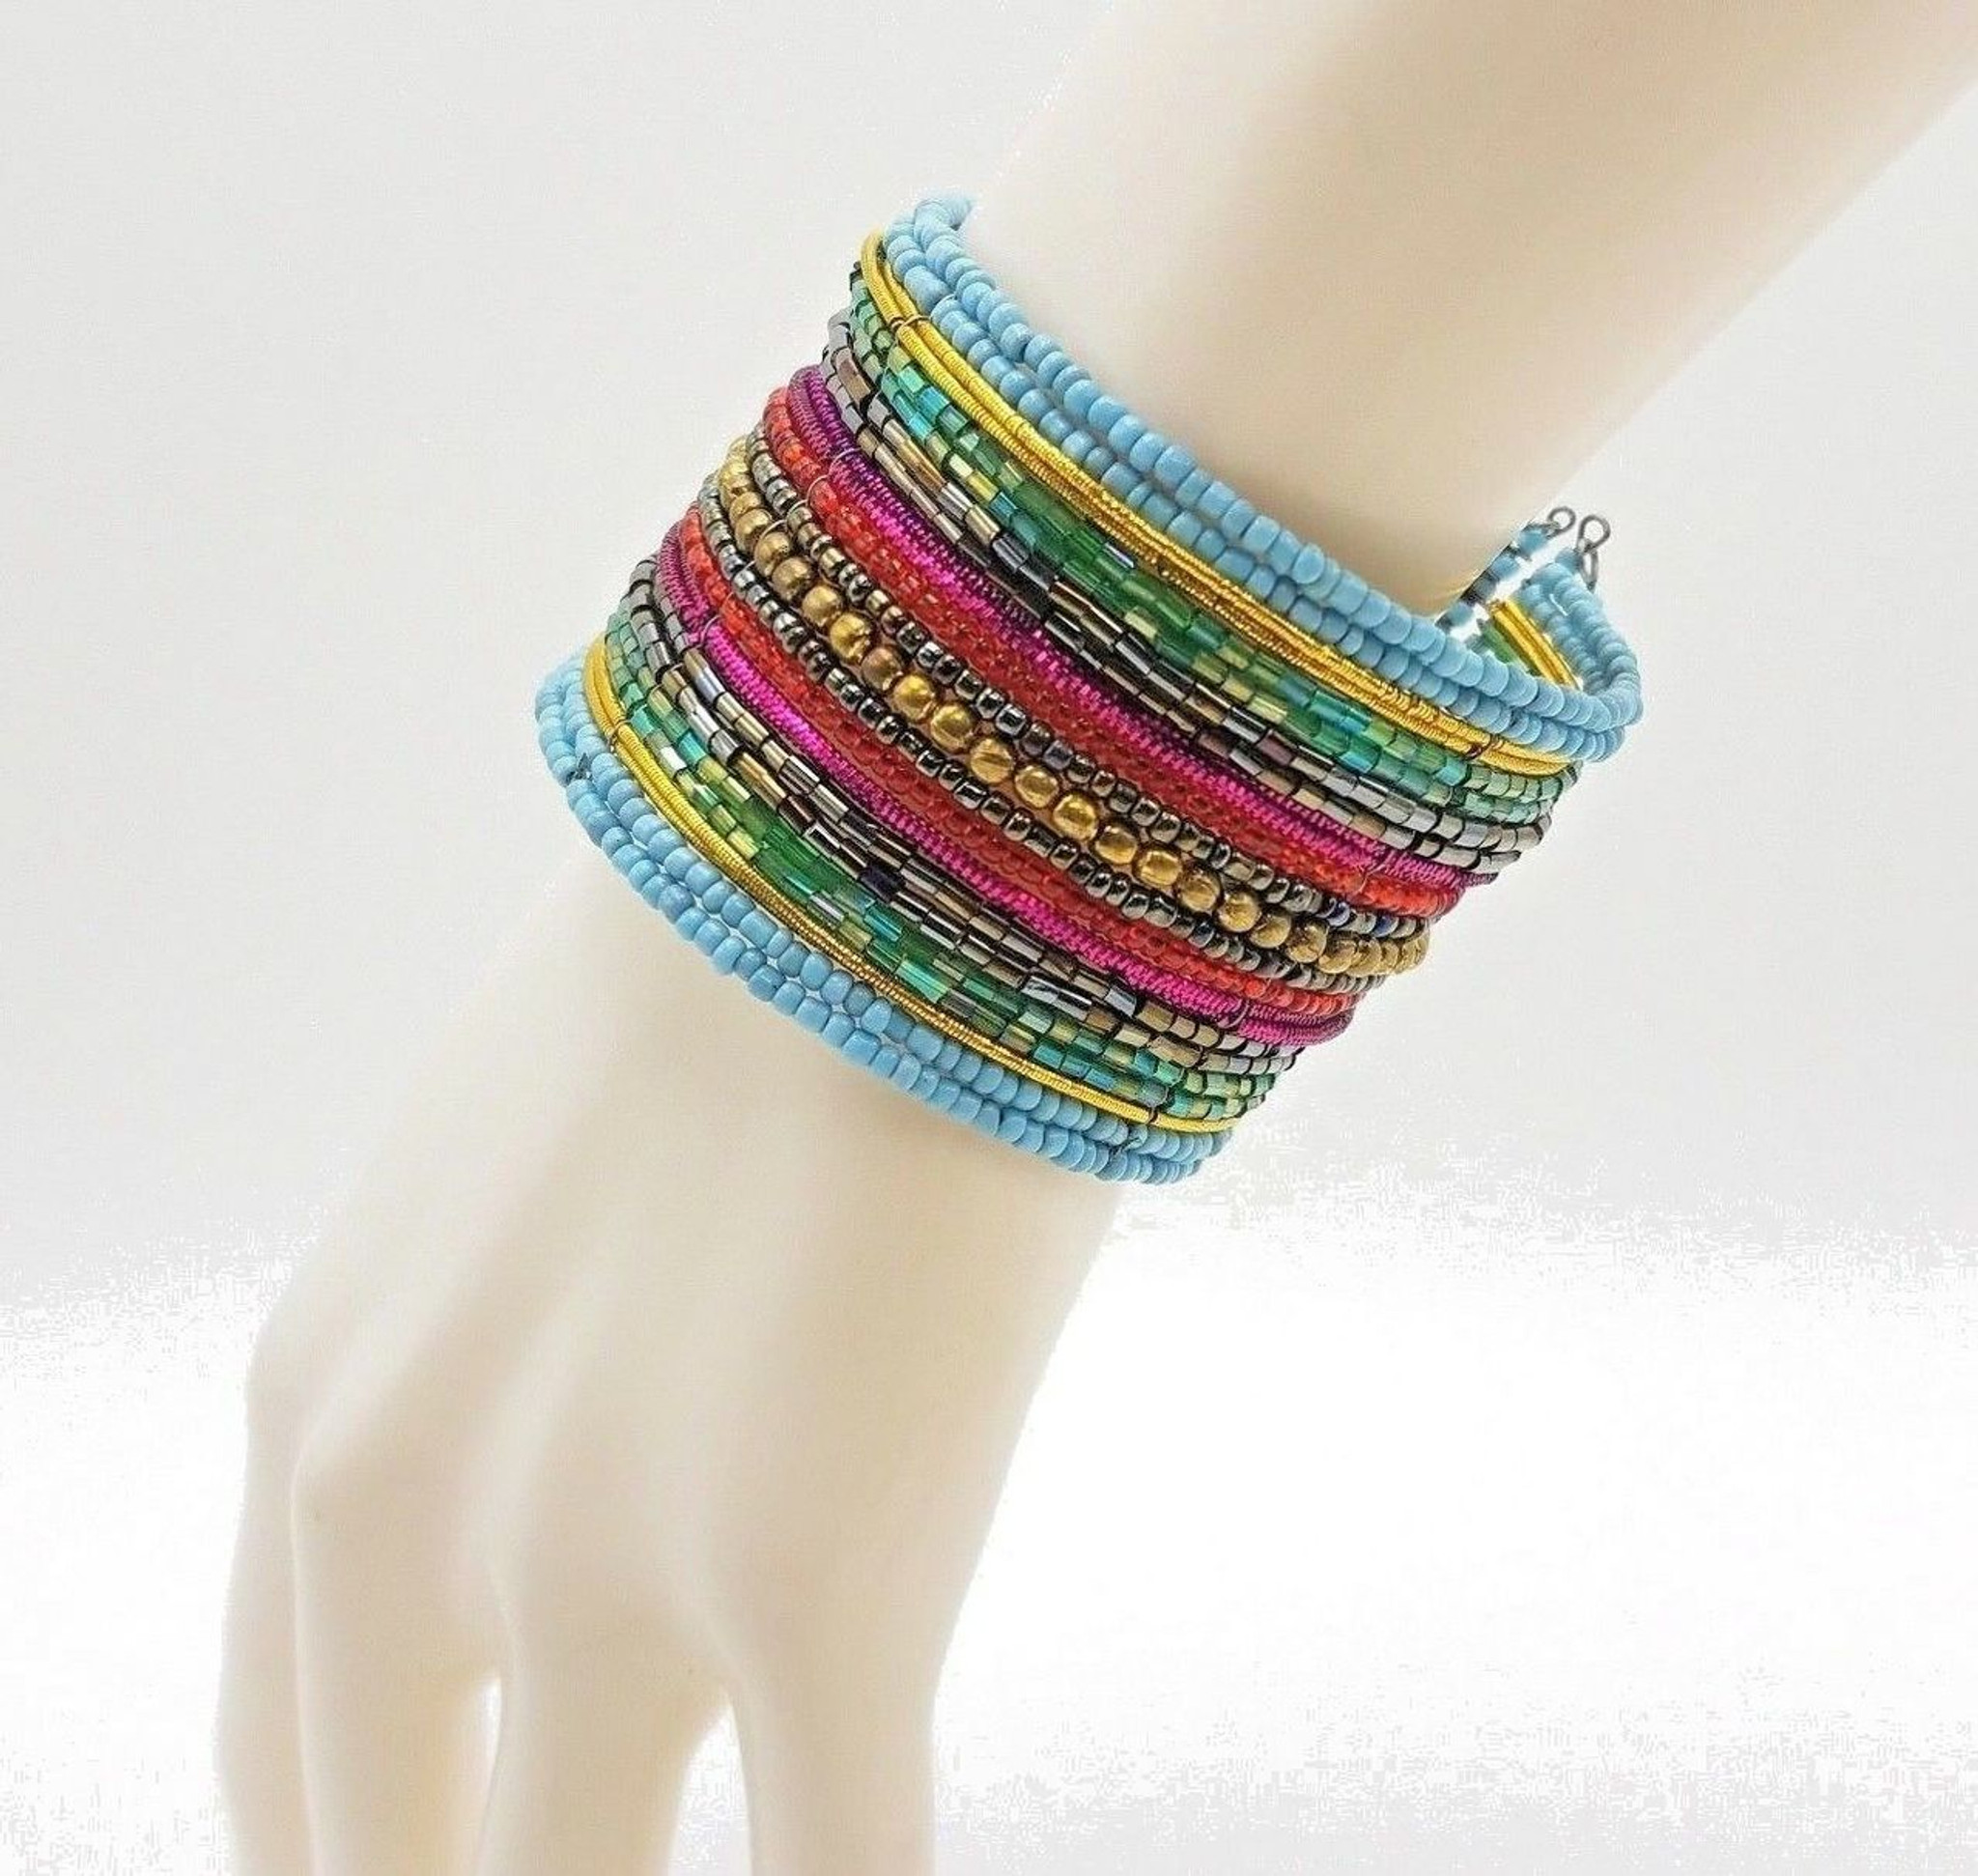 Rainbow Color Seed Beads Memory Wire Cuff Bracelet Boho Beads Festiva Iridescent